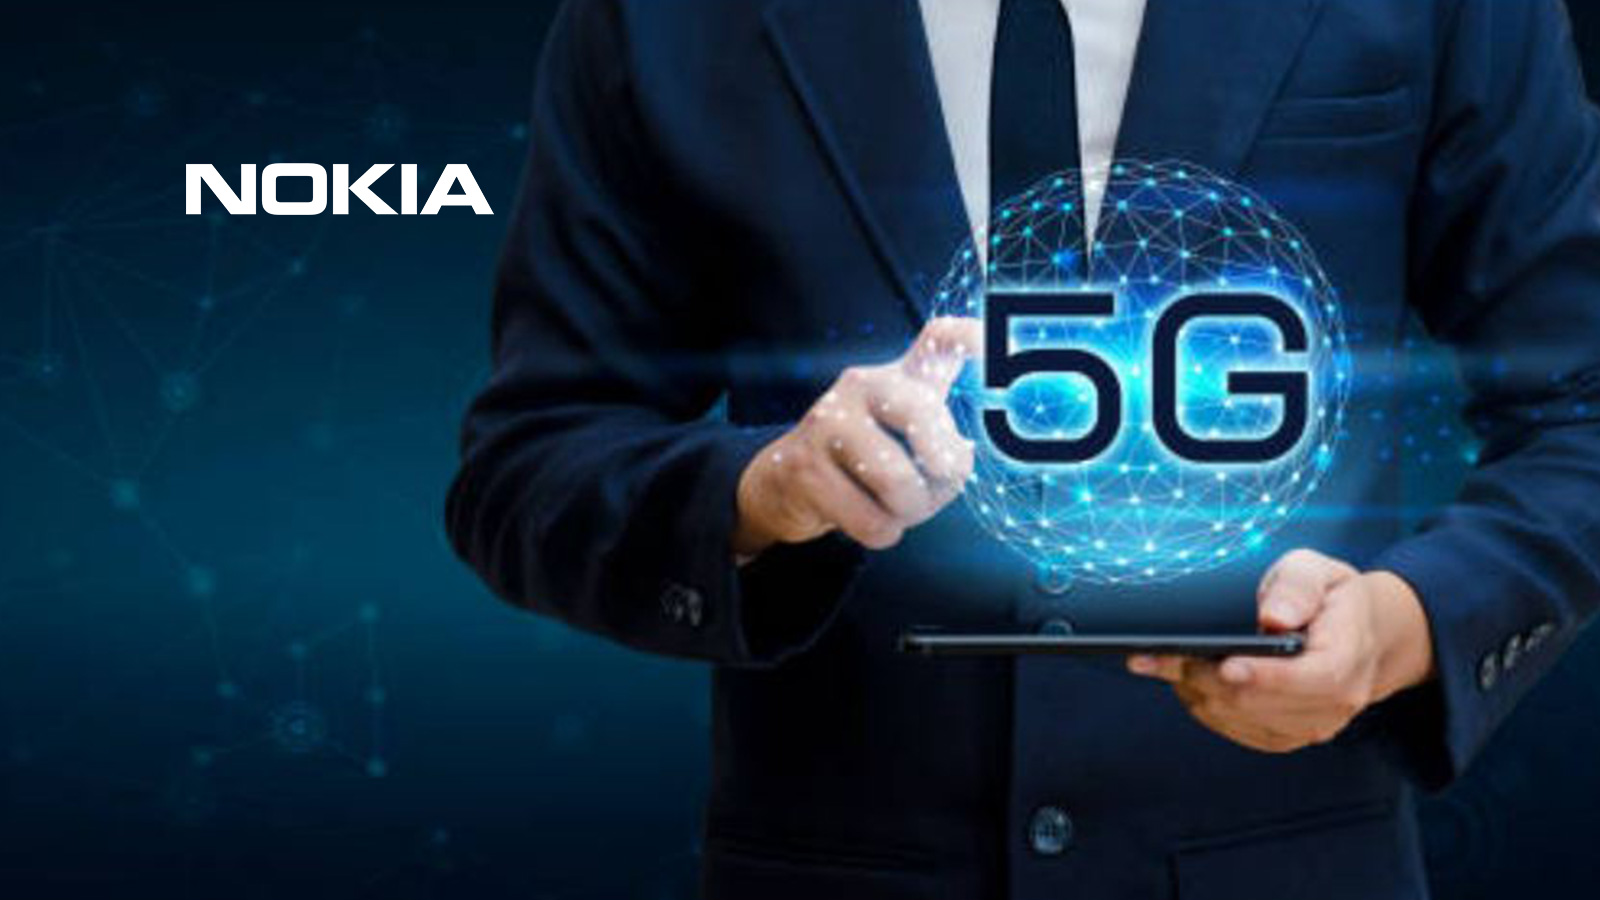 smartphone Nokia 5G